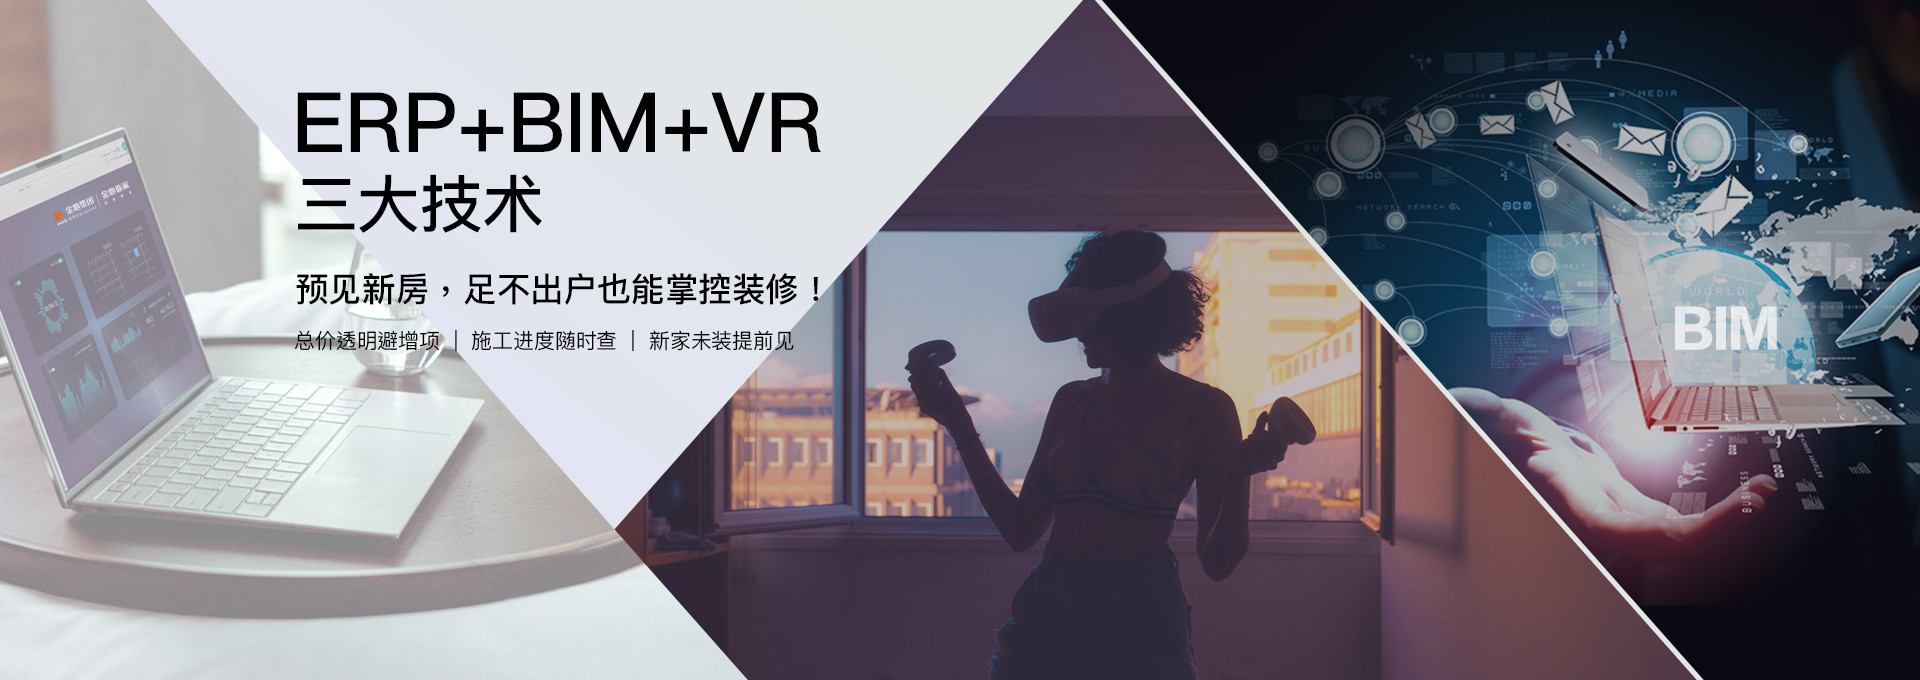 ERP+BIM+VR三大技术